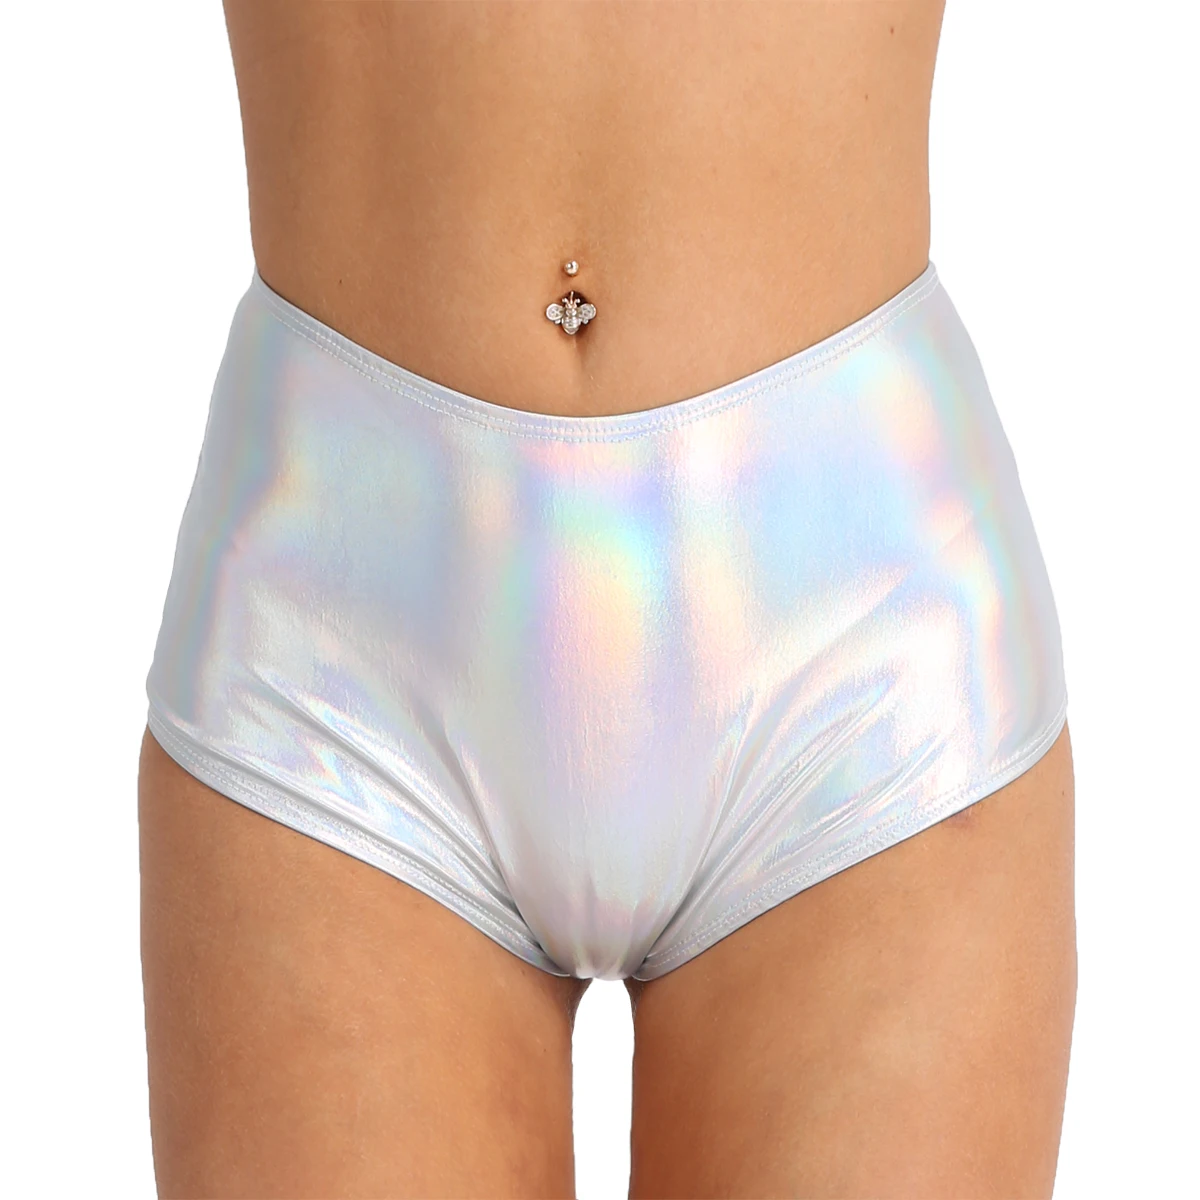 

Women Shiny Metallic Patent Leather Hot Pants Back Zipper High Waisted Booty Shorts Bottoms Shorts For Raves Dance Swimwear